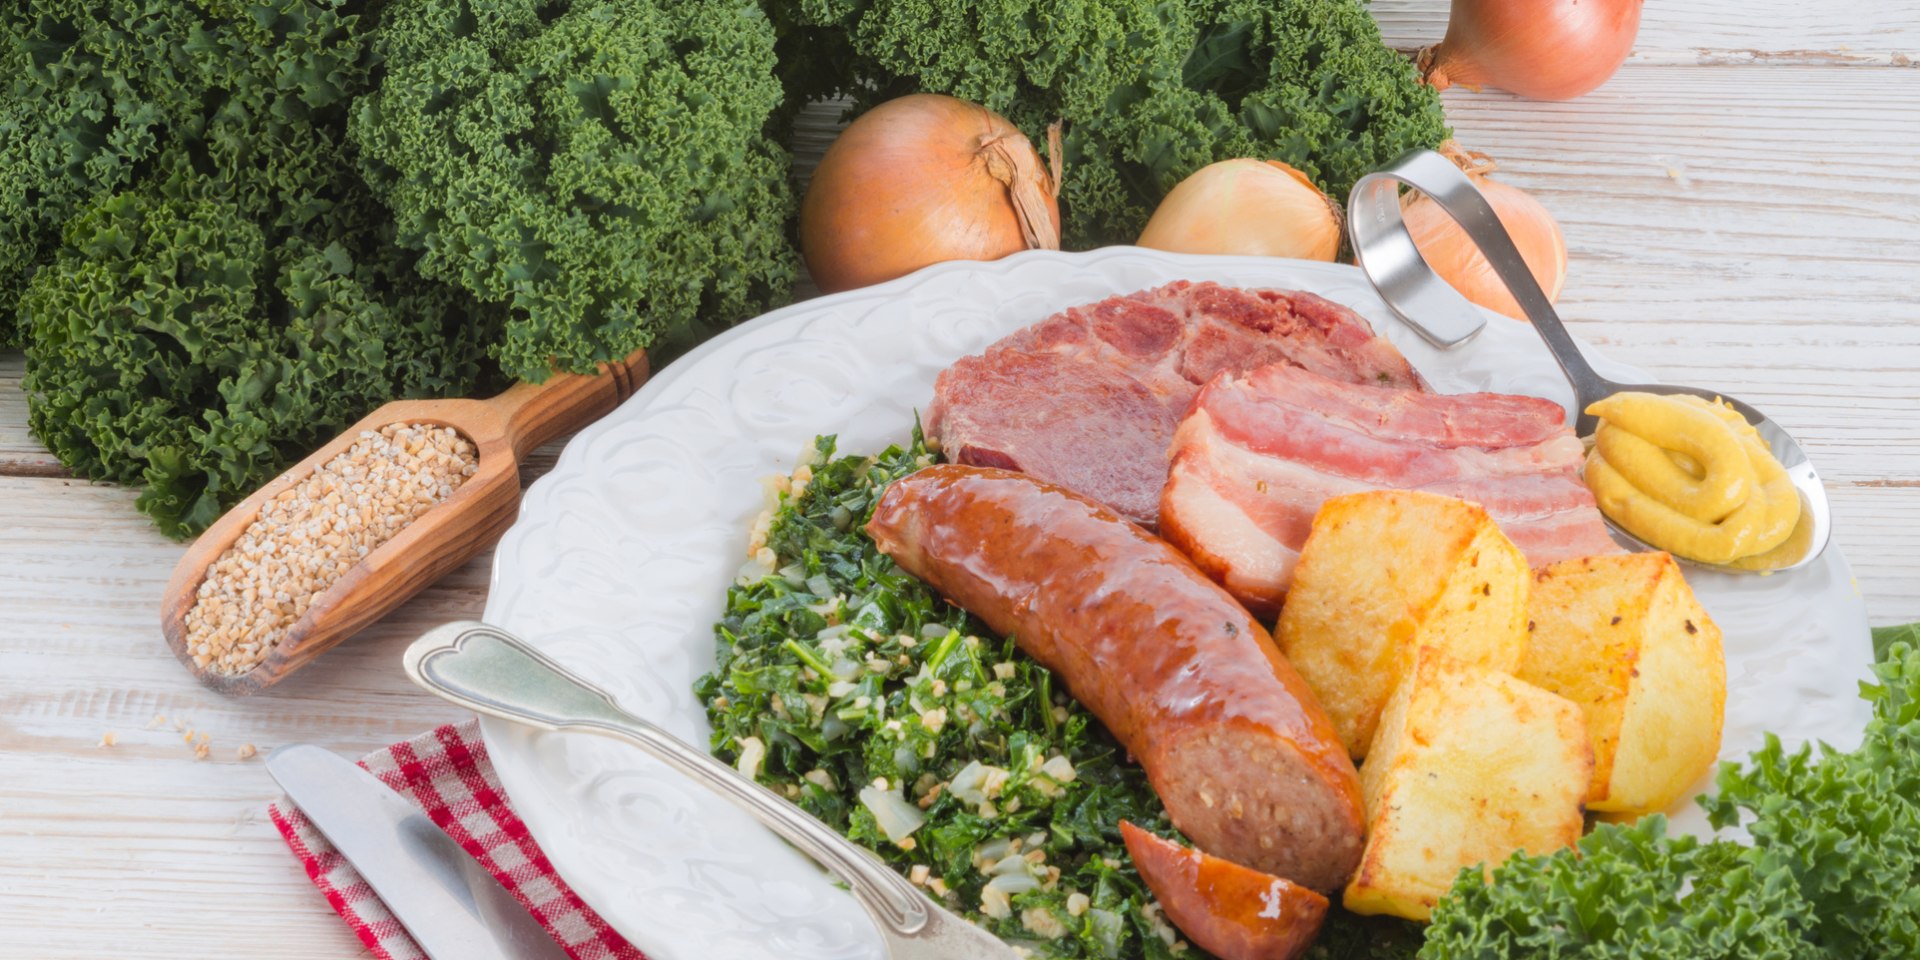 The plate is stocked with kale, pinkel, potatoes and smoked pork., © Fotolia - Dzinnik Darius